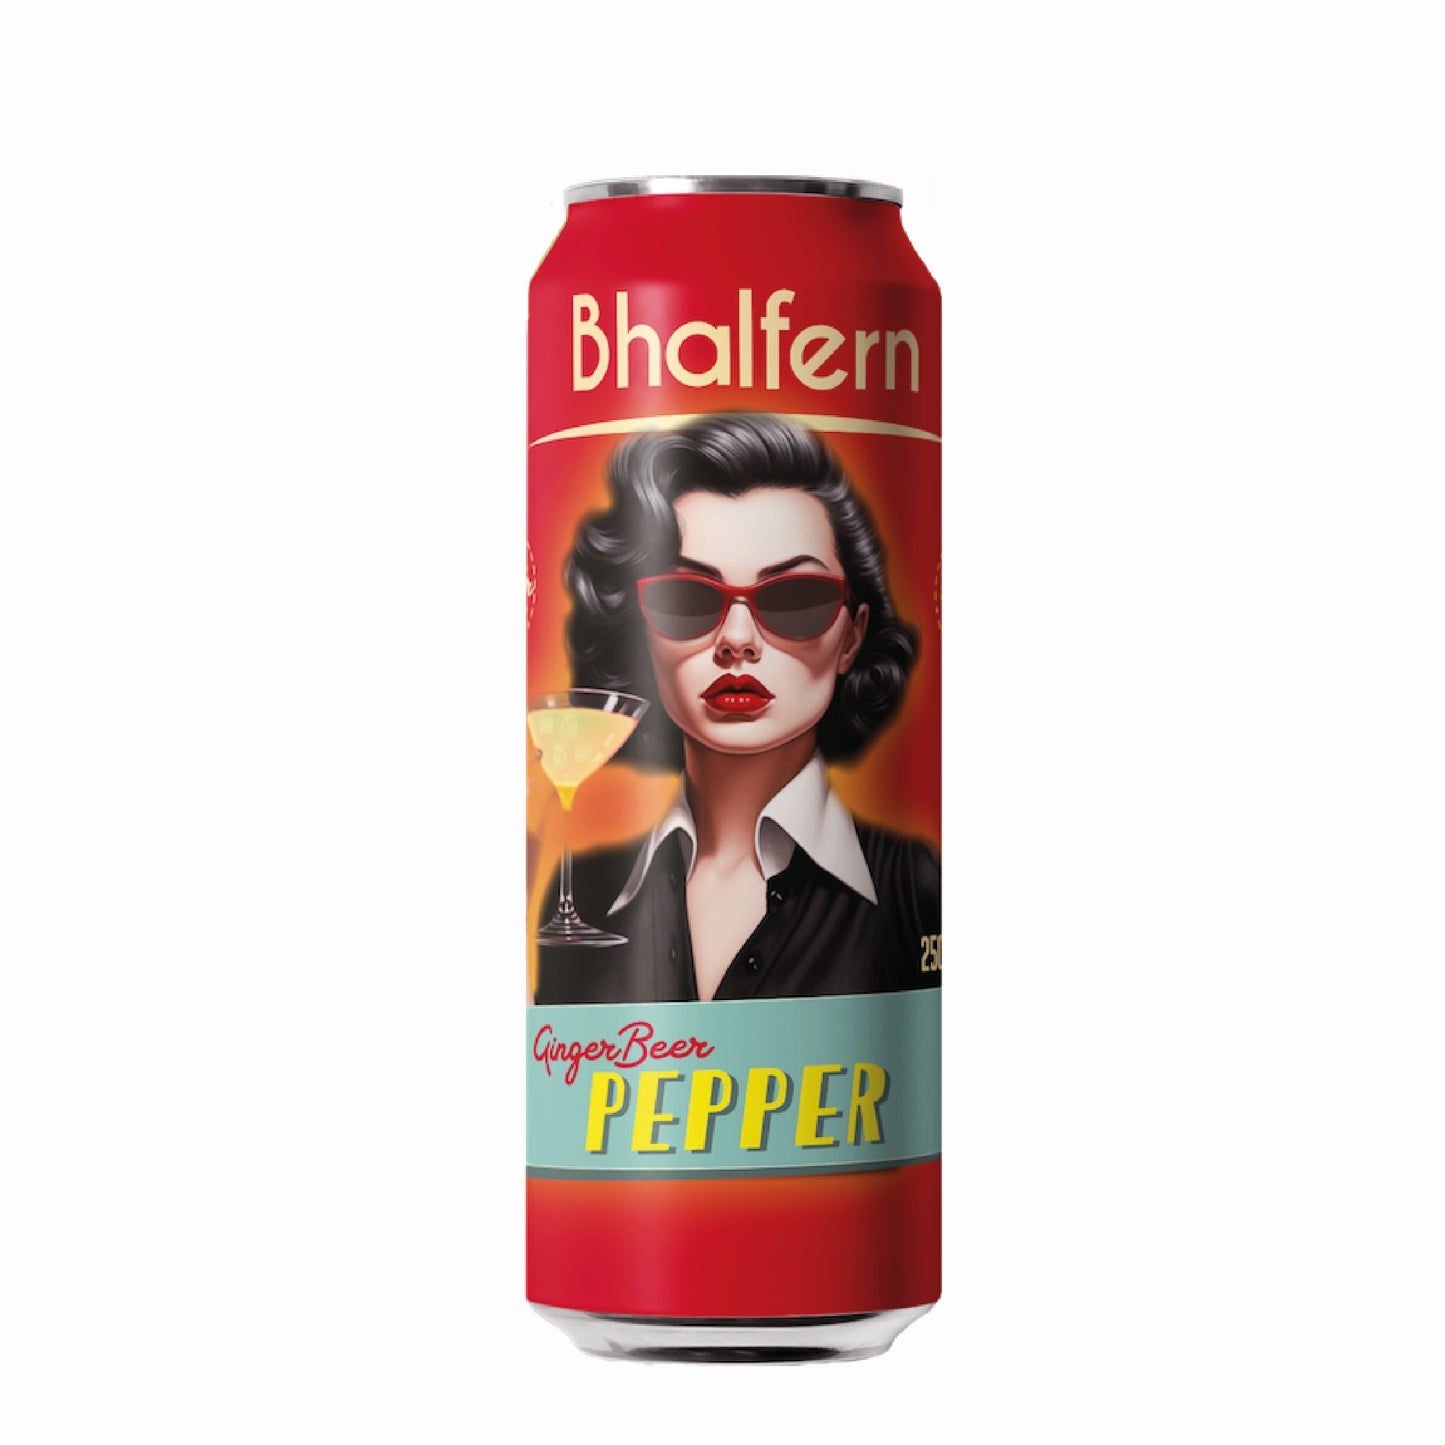 Bhalfern Ginger Beer Pepper Pack x 6 latas de 250ml